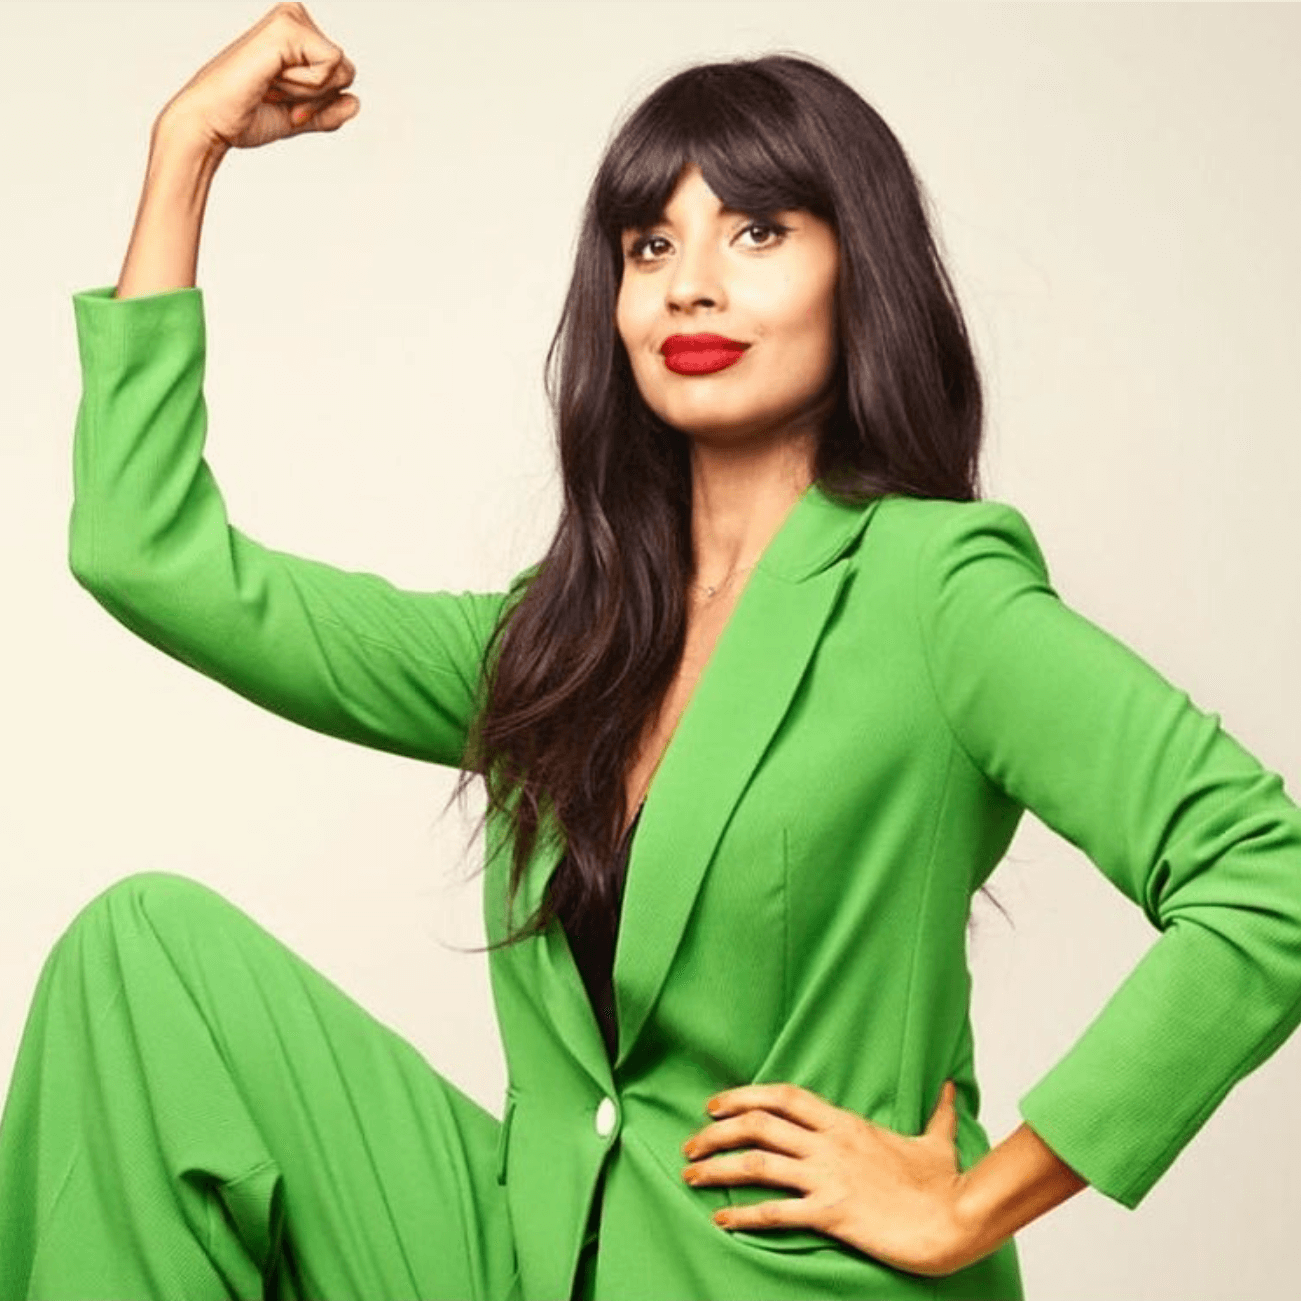 Jameela Jamil cast as Titania in upcoming Marvel Disney Plus series She-Hulk